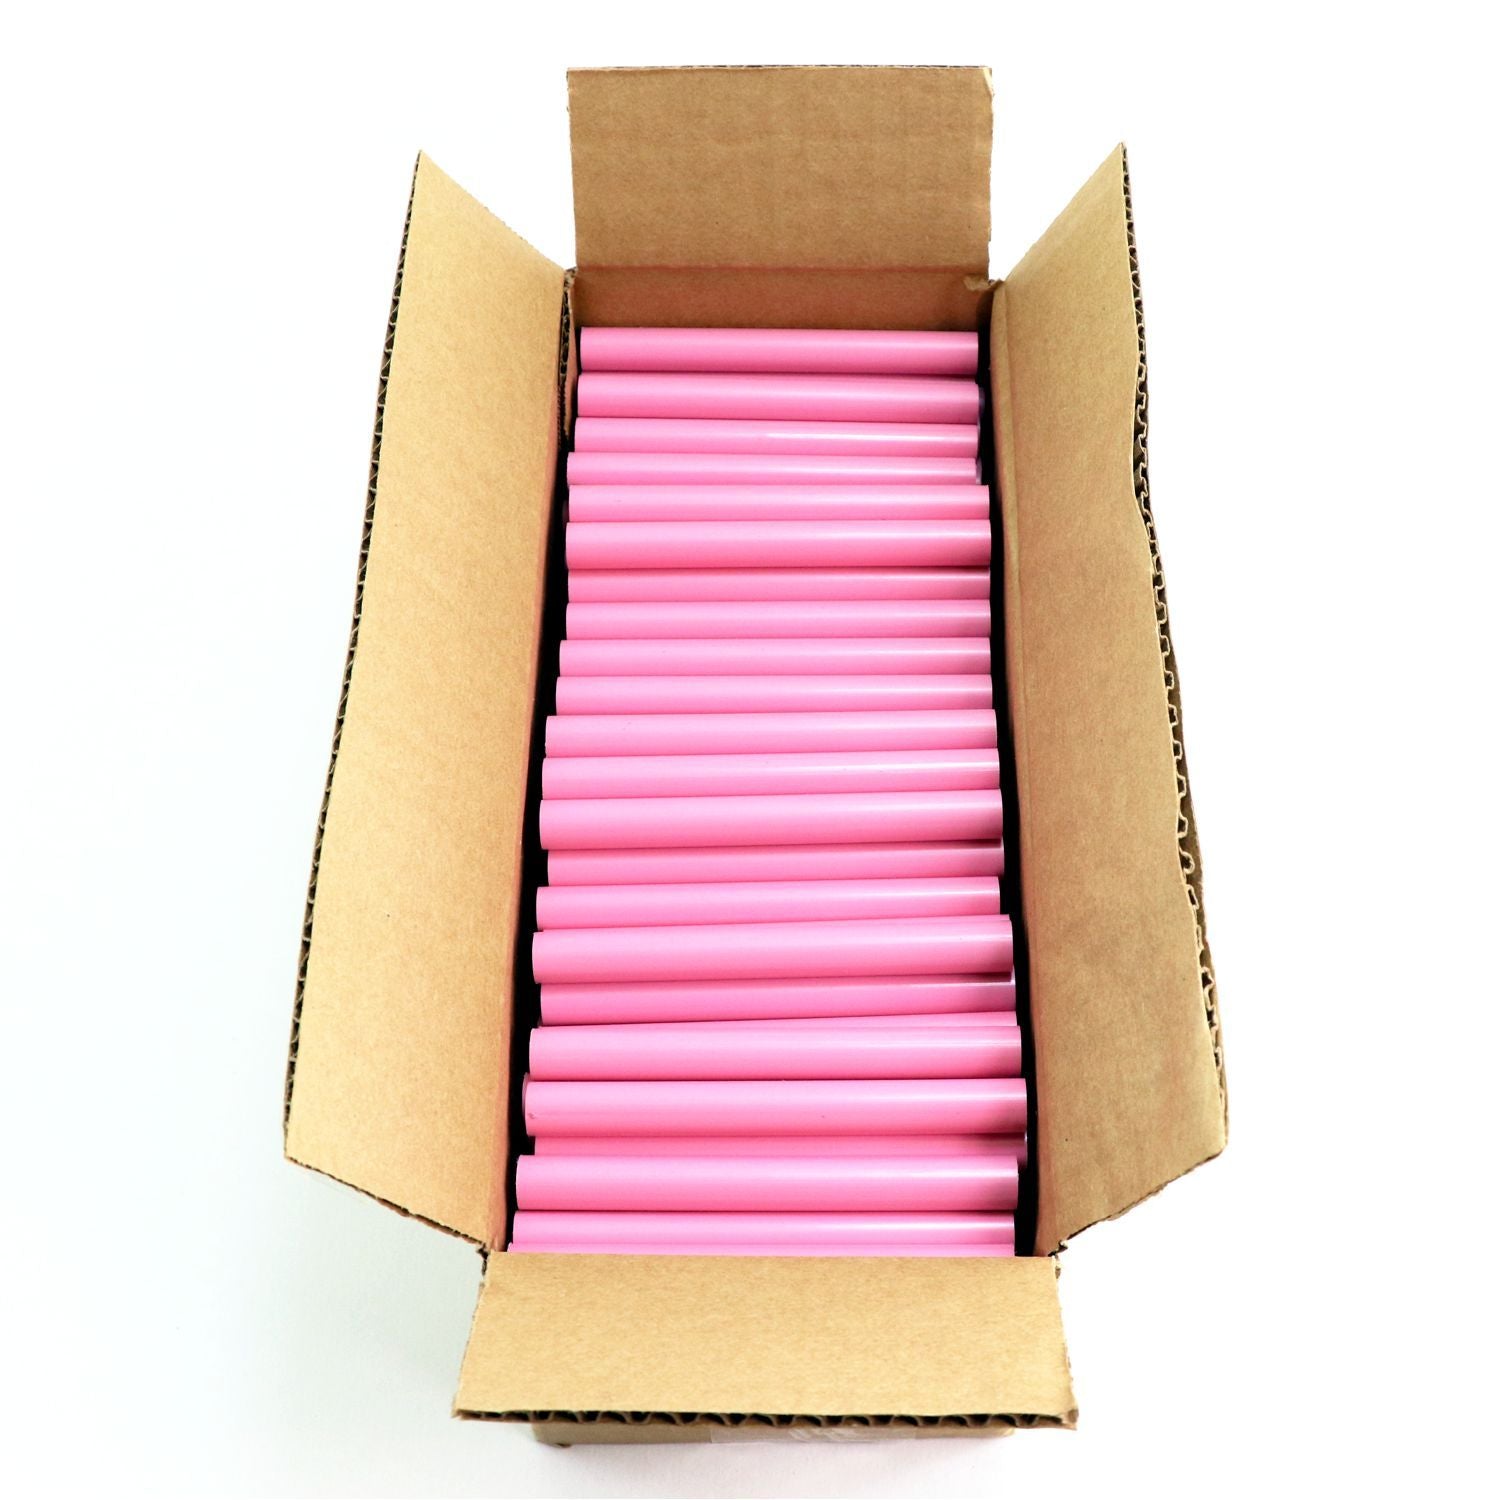 Pink Hot Glue Sticks Mini Size - 4 - 12 Pack – Surebonder